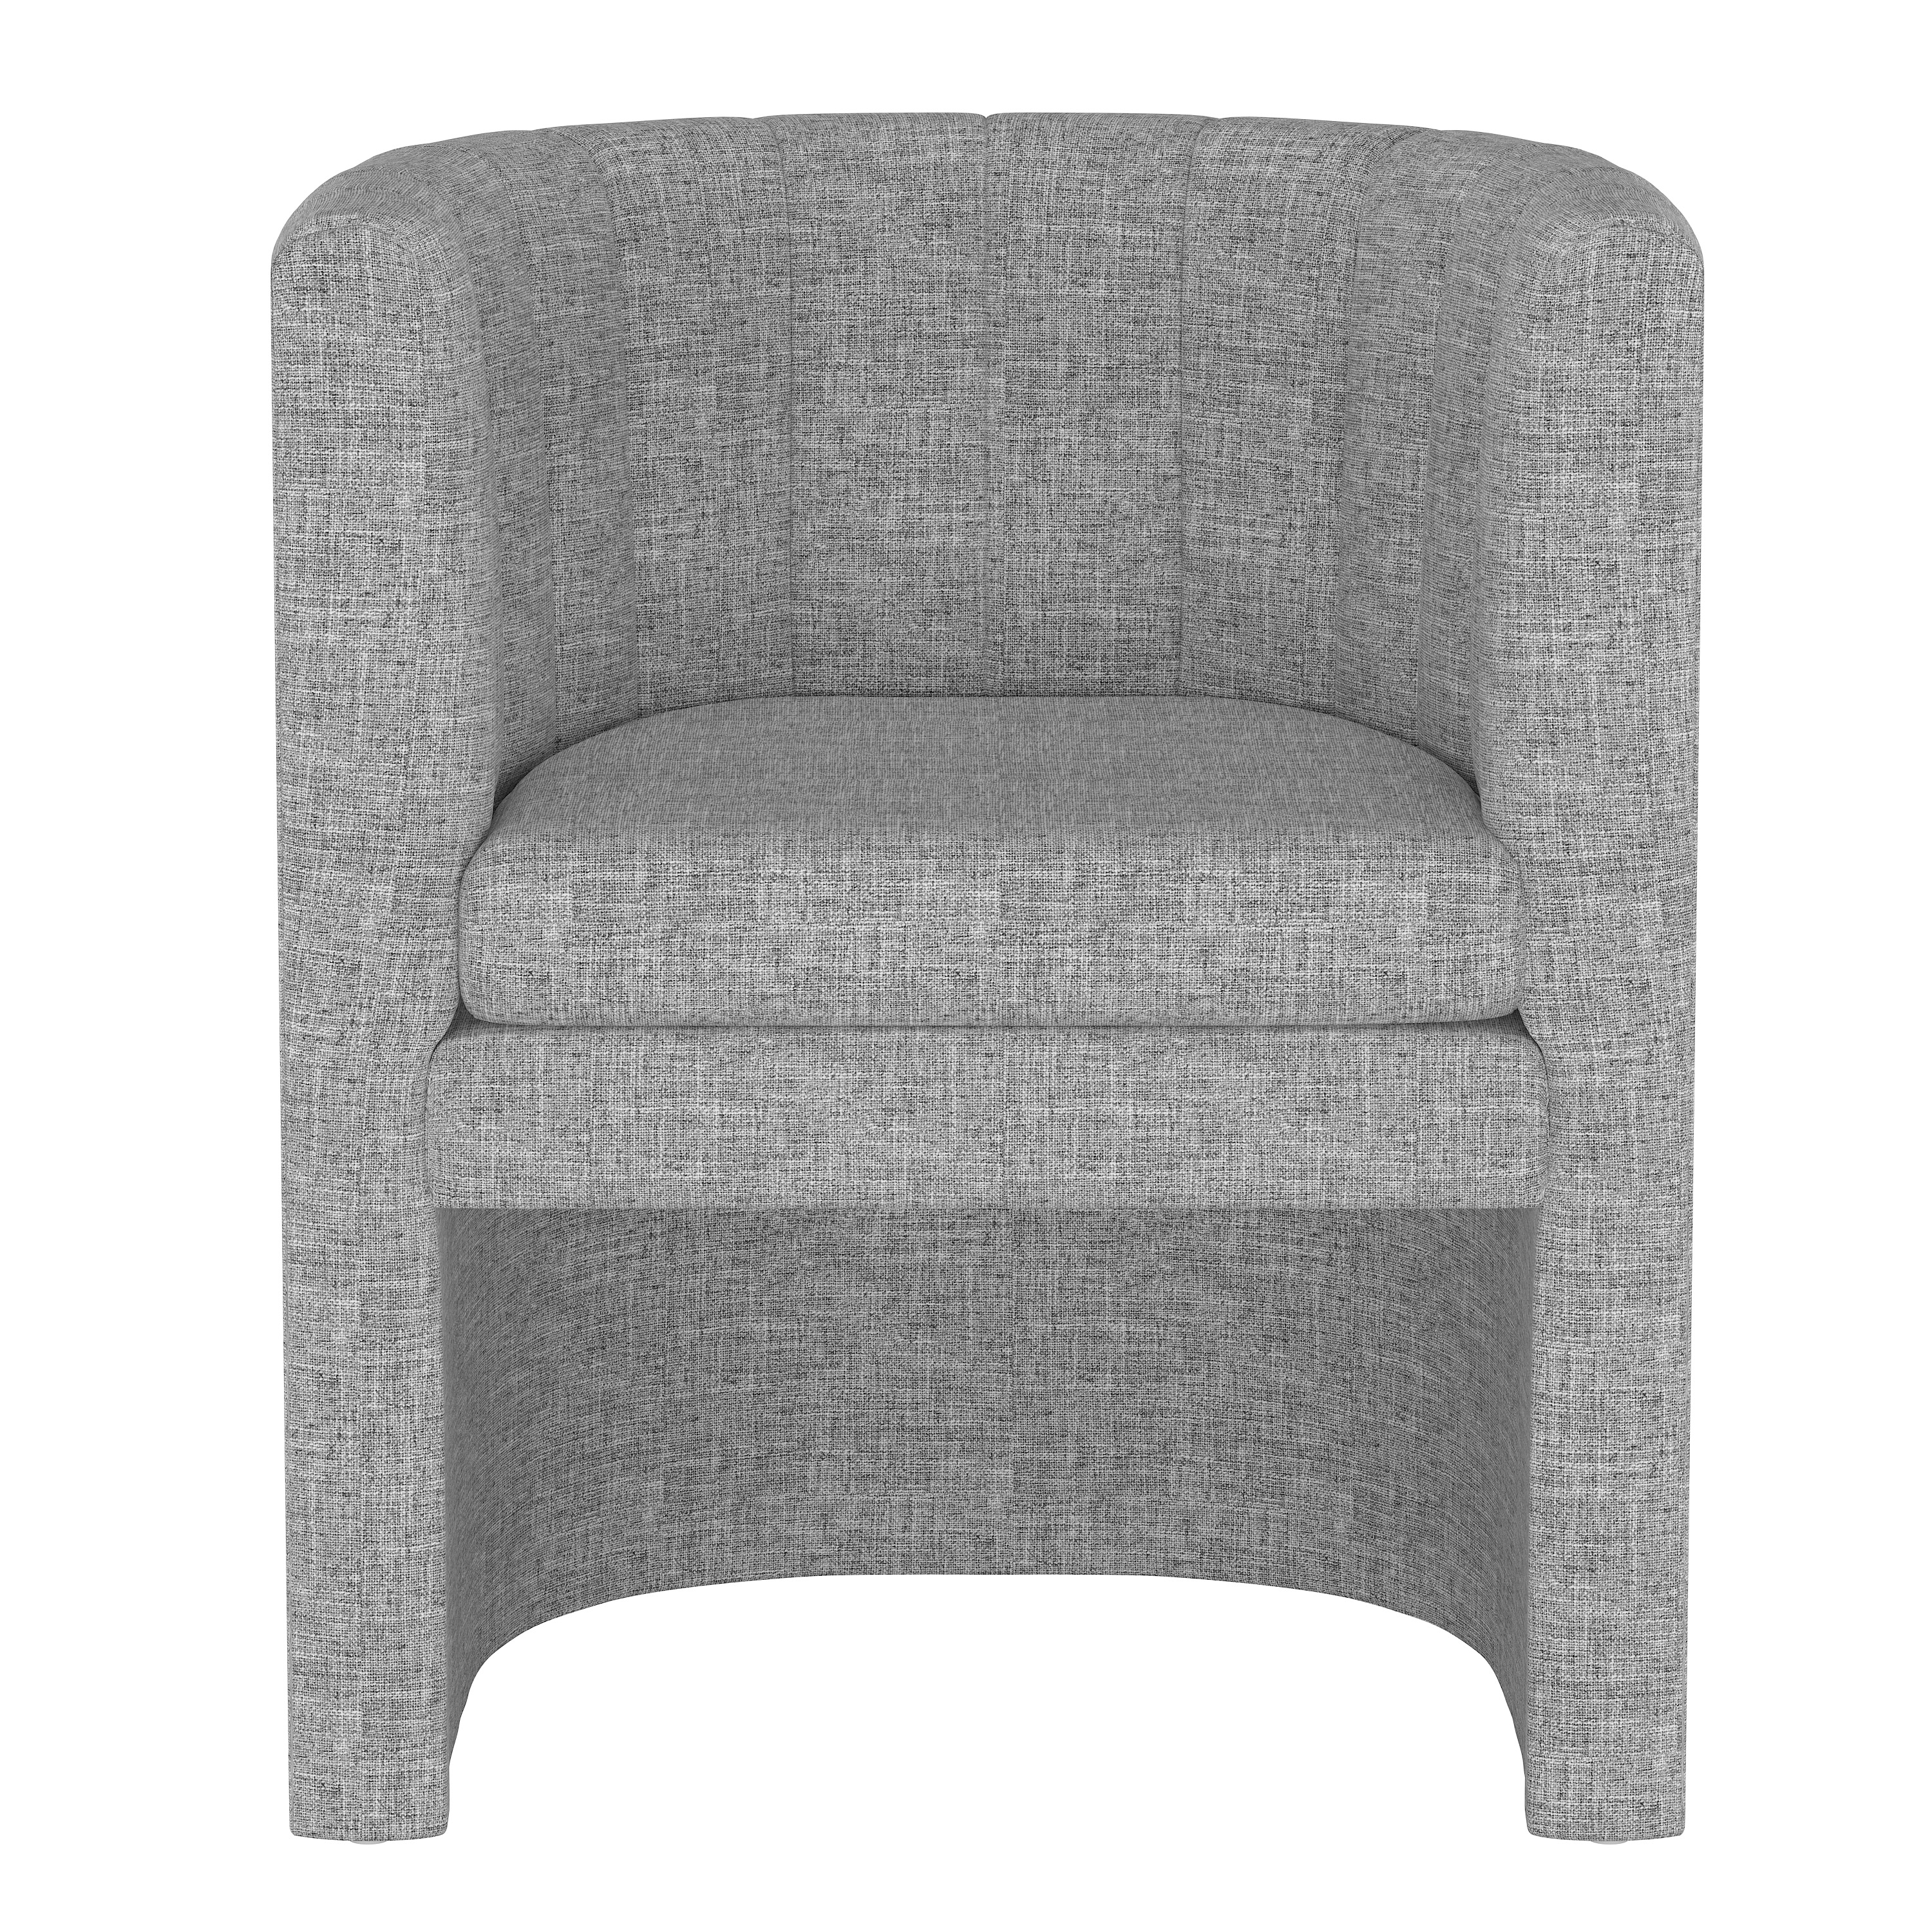 Wellshire Chair, Pumice Linen - Image 1